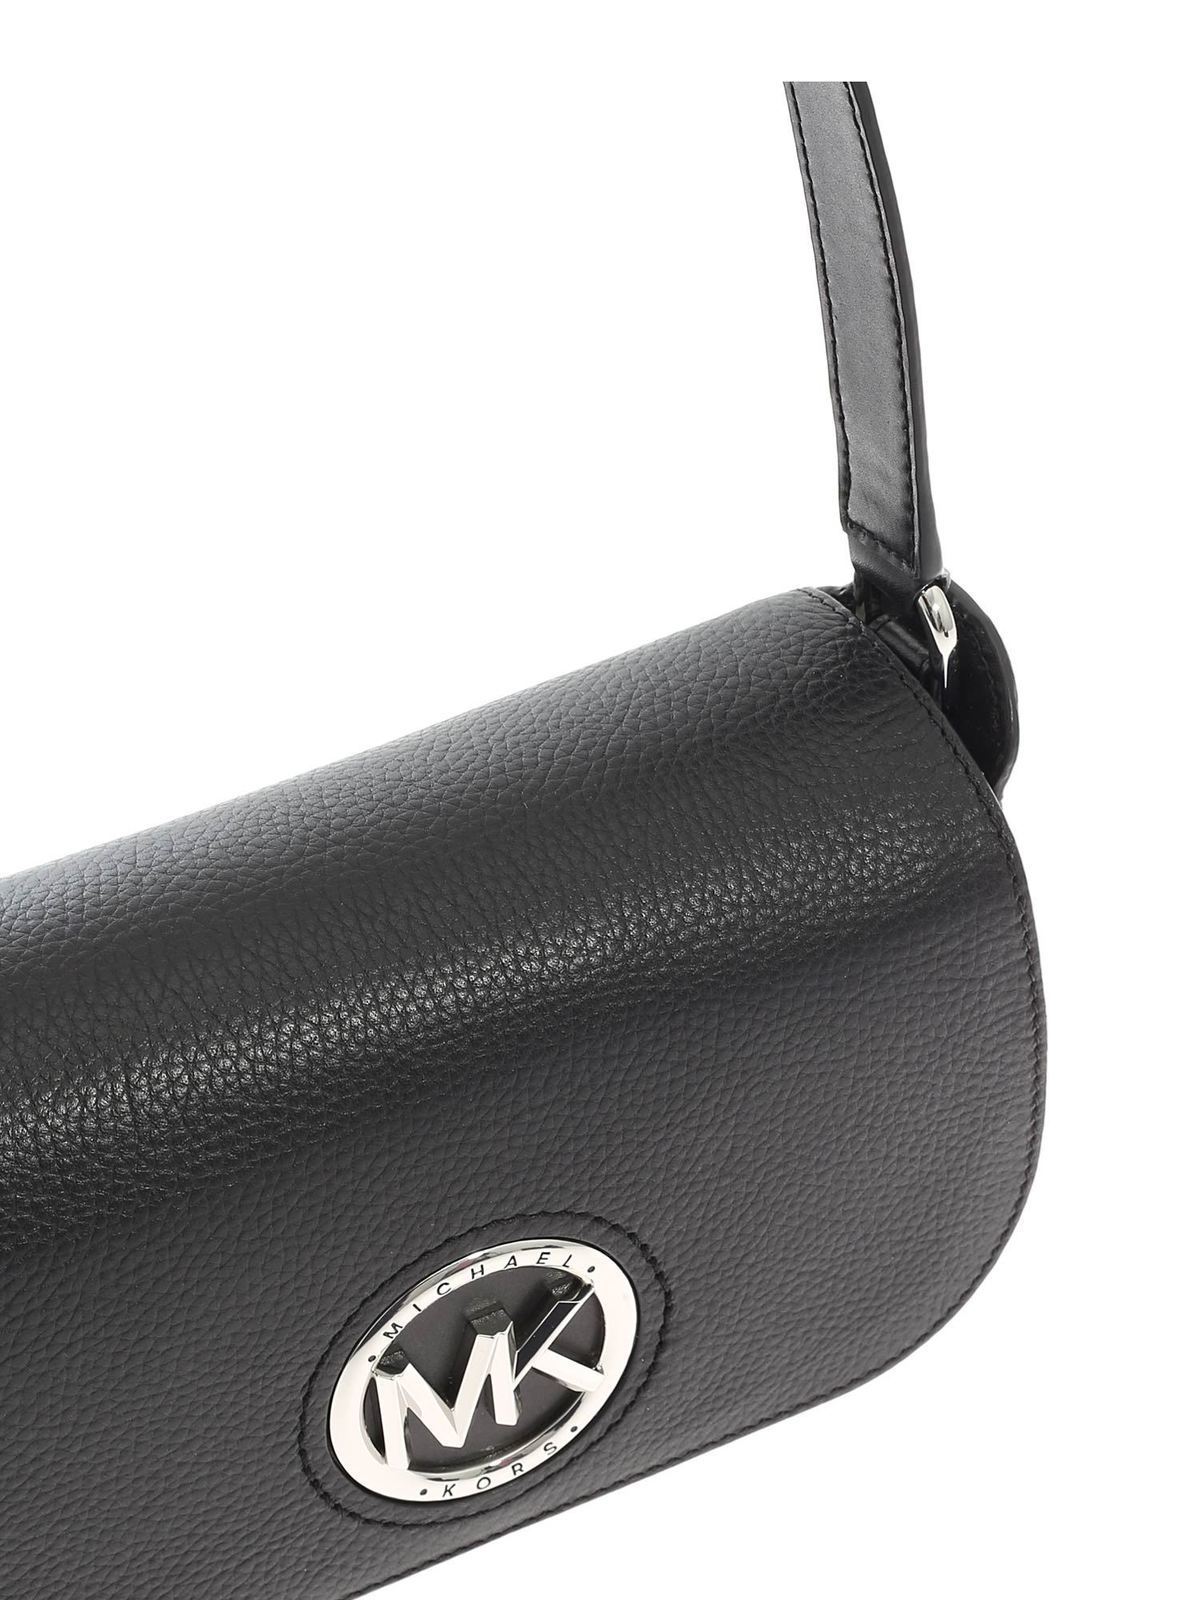 michael kors handbags with mk logo